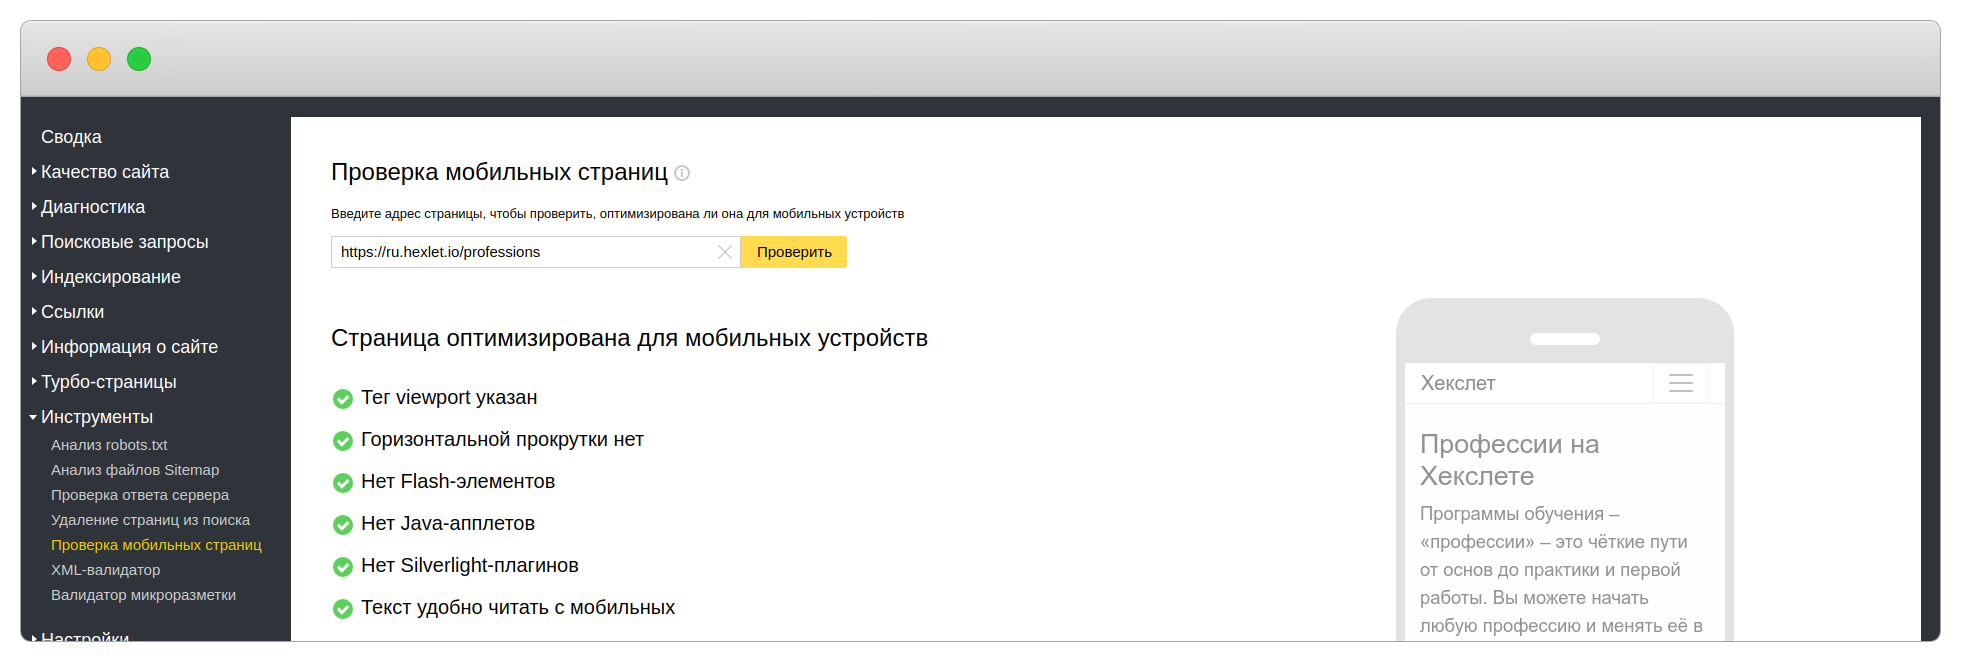 Результат проверки Яндекс